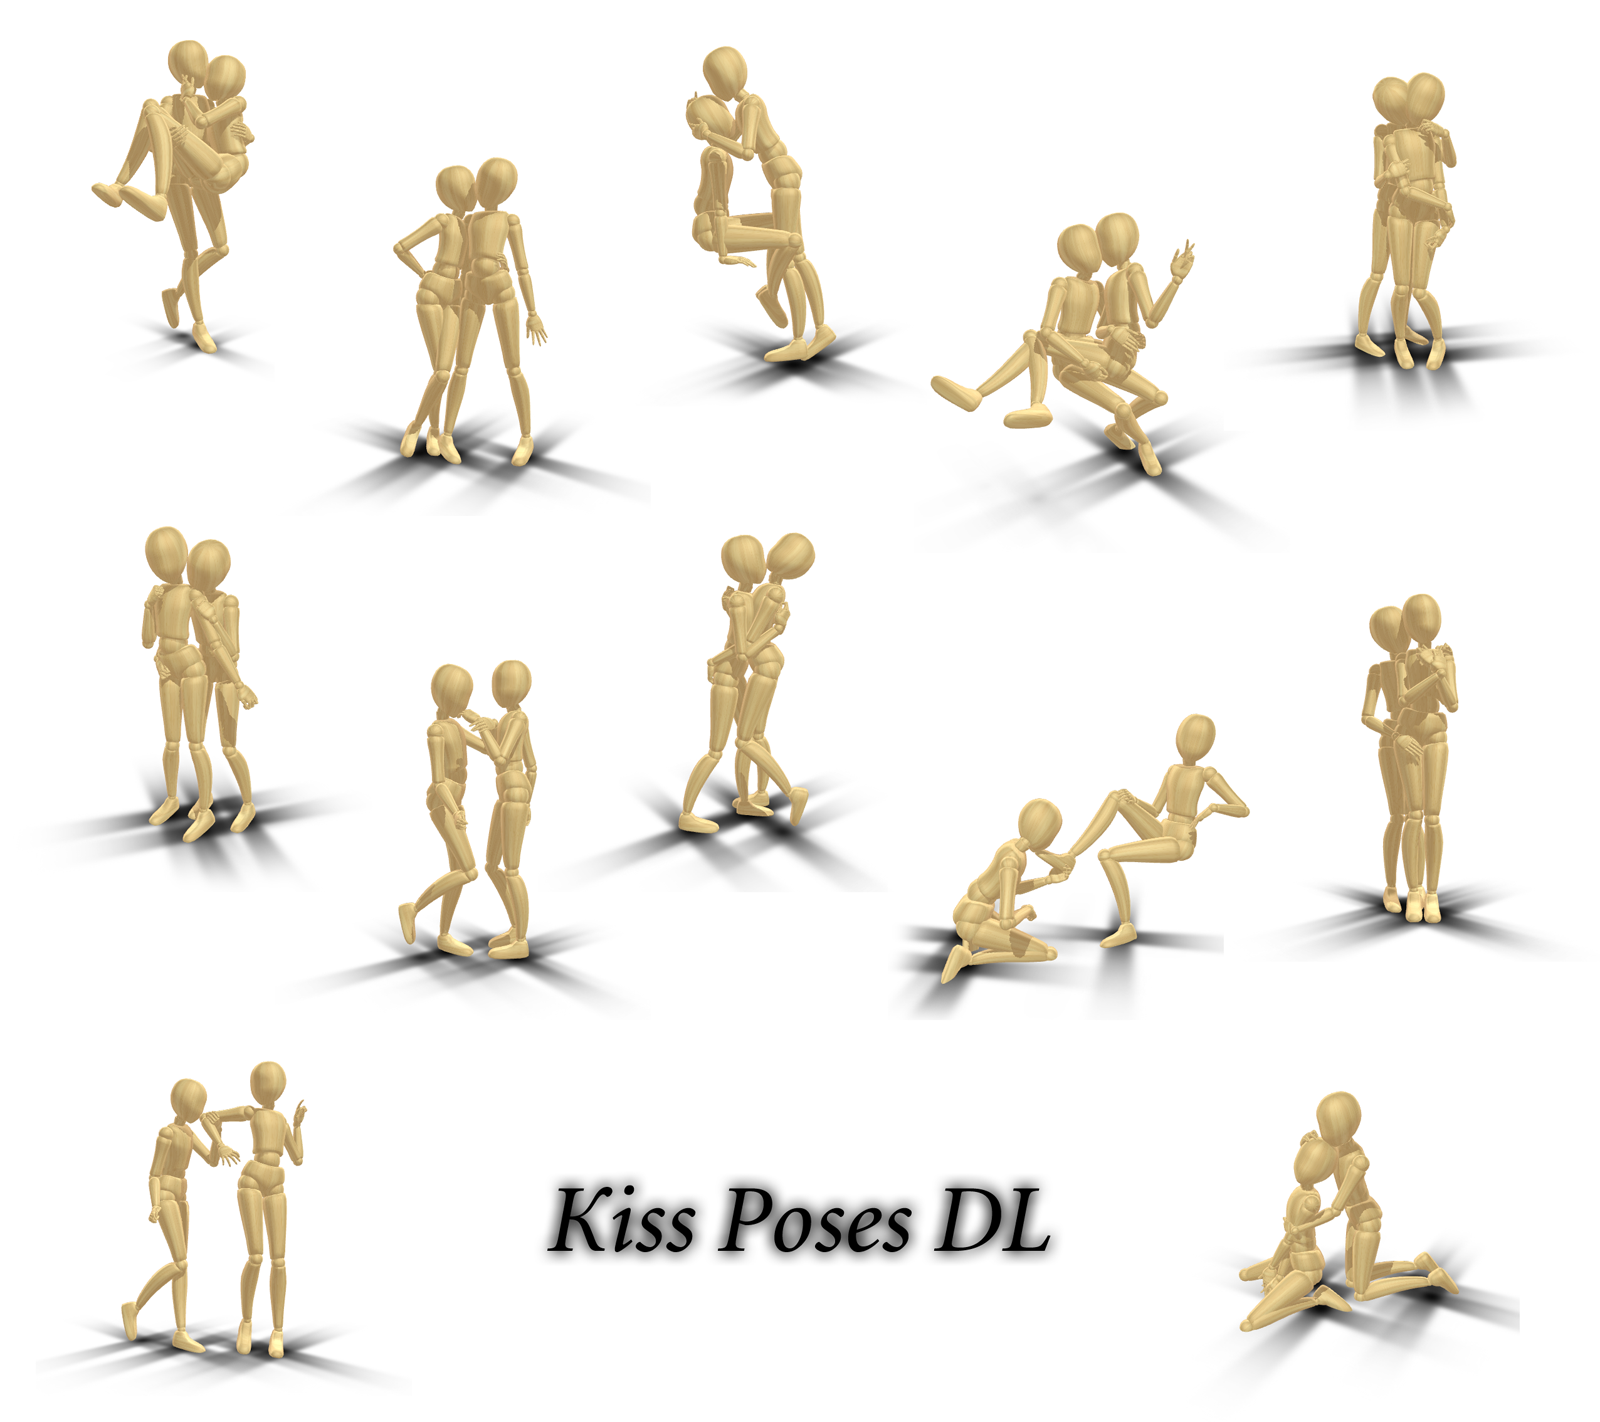 Kiss Poses DL